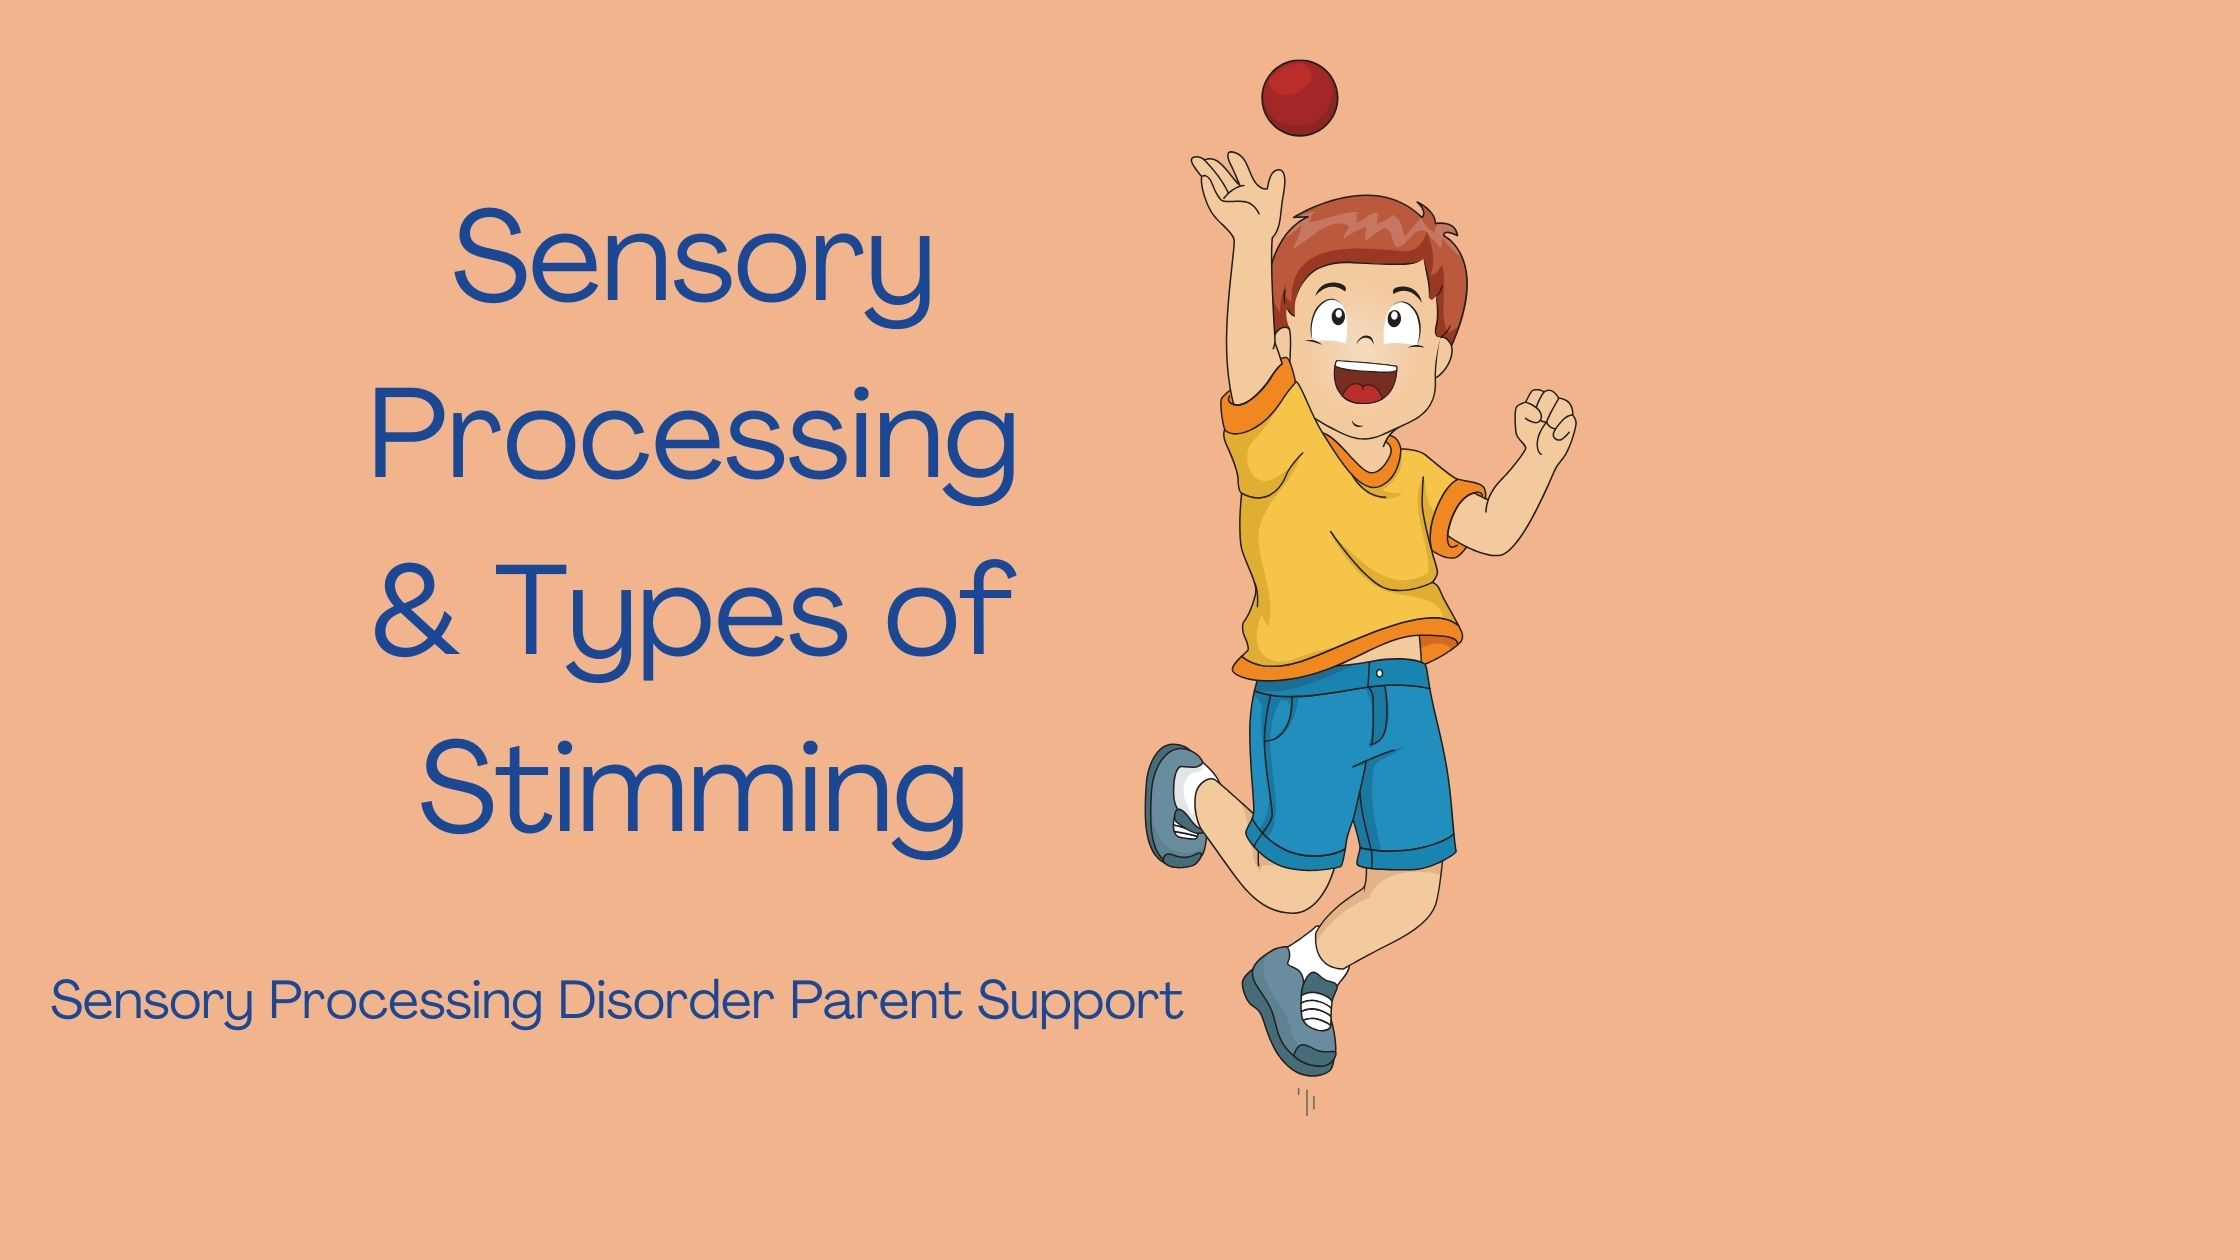 child stimming who has sensory processing disorder playing with a ball jump stim Sensory Processing & Types of Stimming